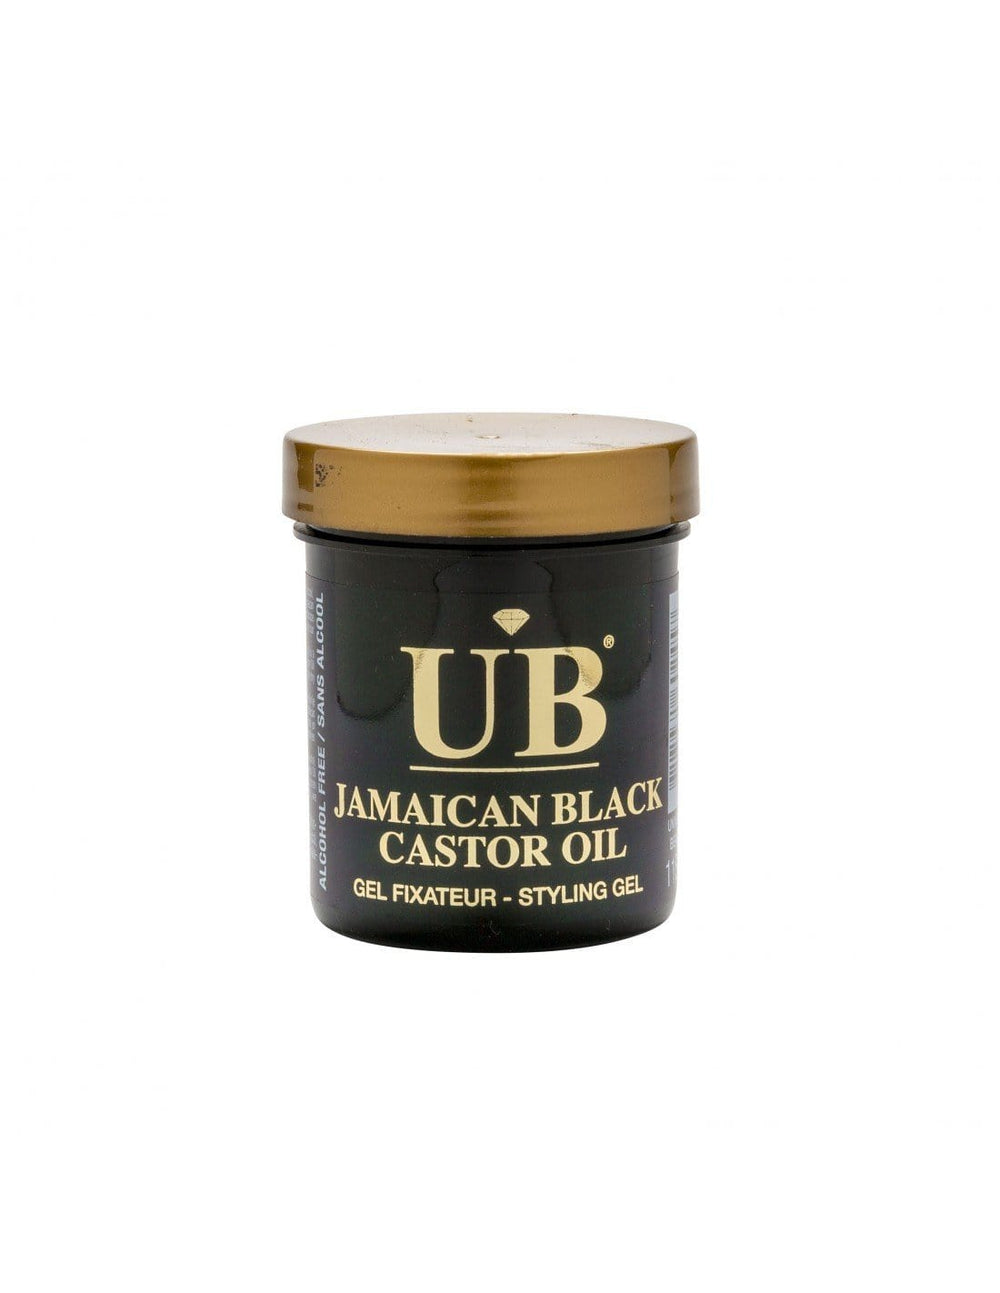 UB Jamaican Black Castor Oil Styling Gel 4 oz